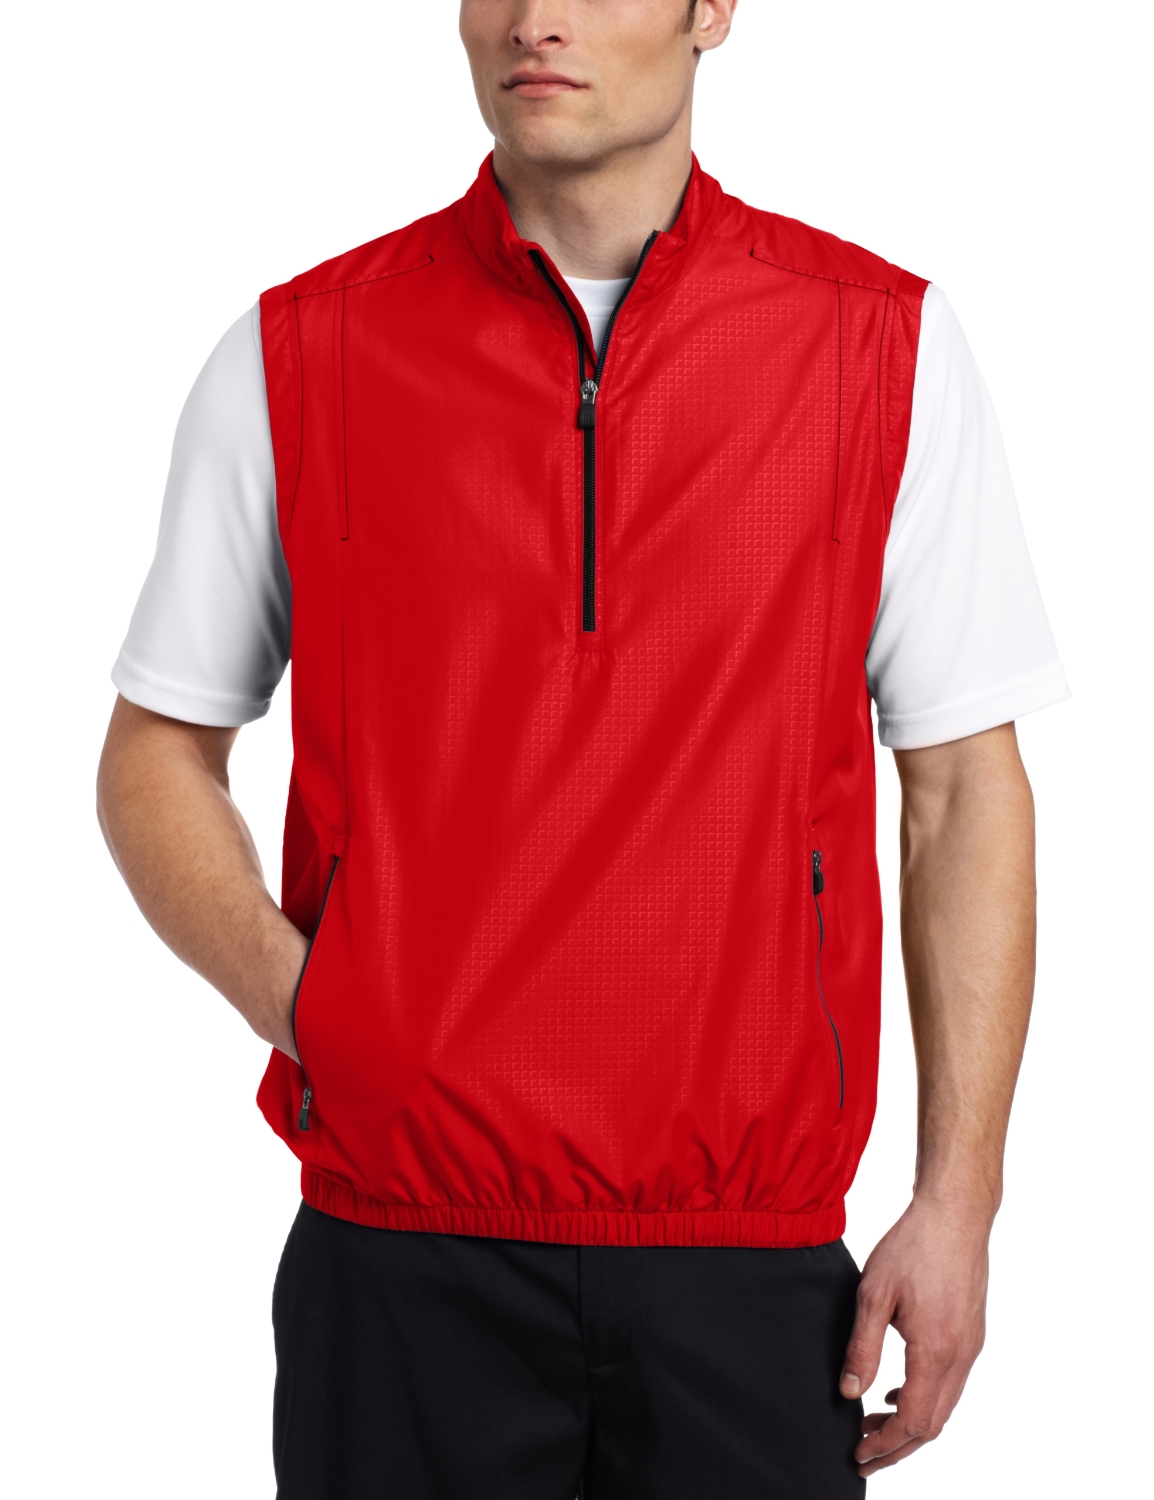 adidas golf wind vest